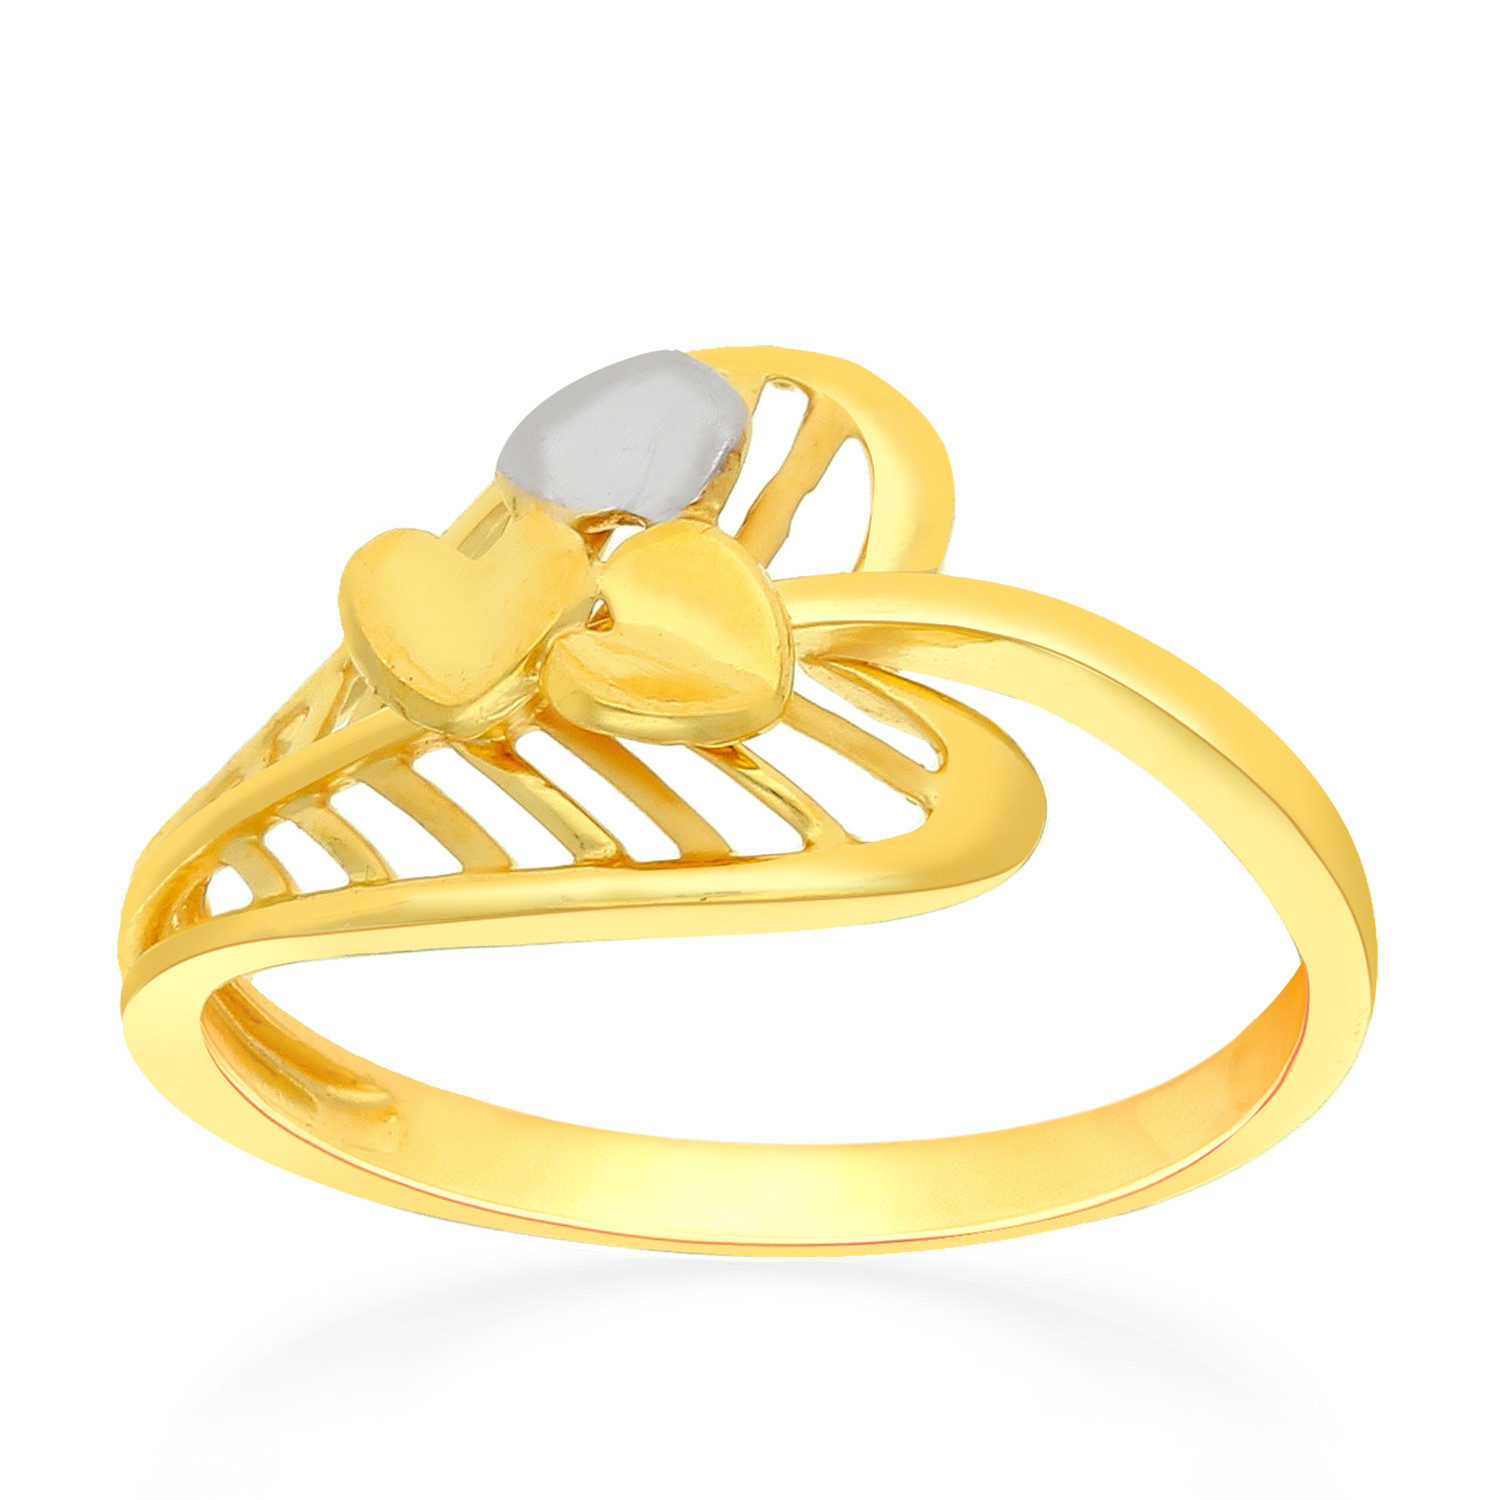 Buy Malabar Gold & Diamonds 22k (916) Yellow Gold Ring for Girls at  Amazon.in